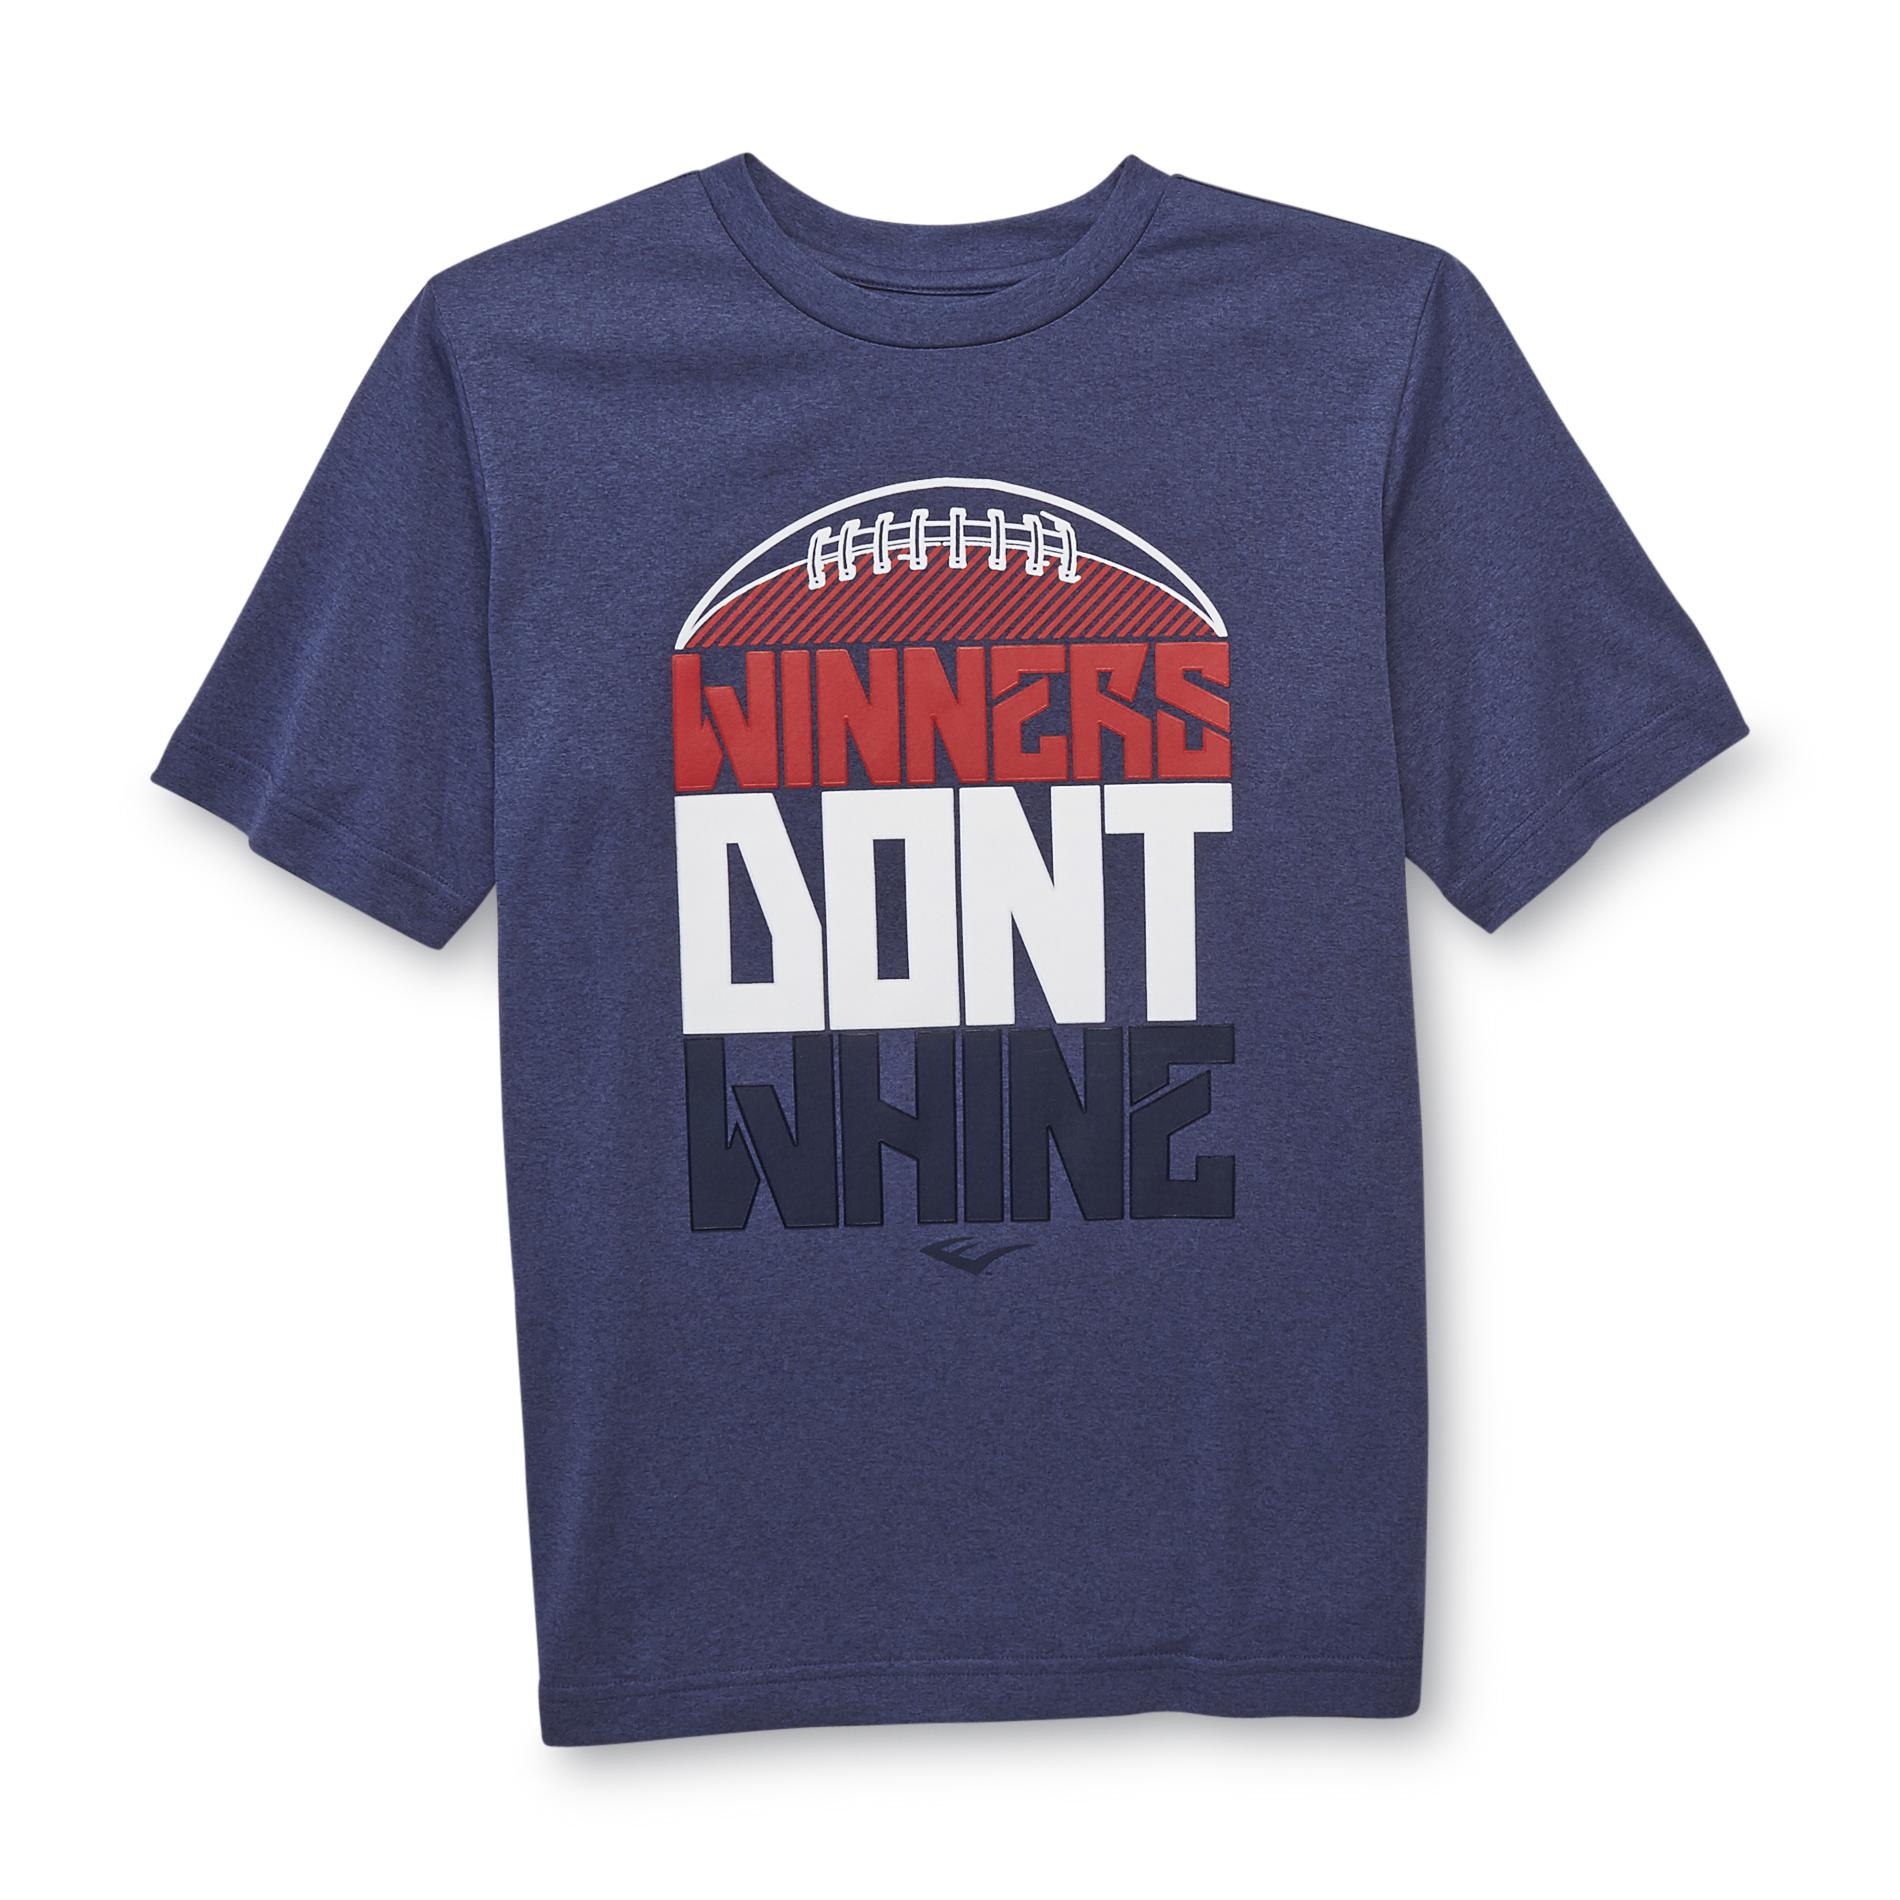 Everlast&reg; Boy's Mesh Athletic T-Shirt - Winners Don't Whine